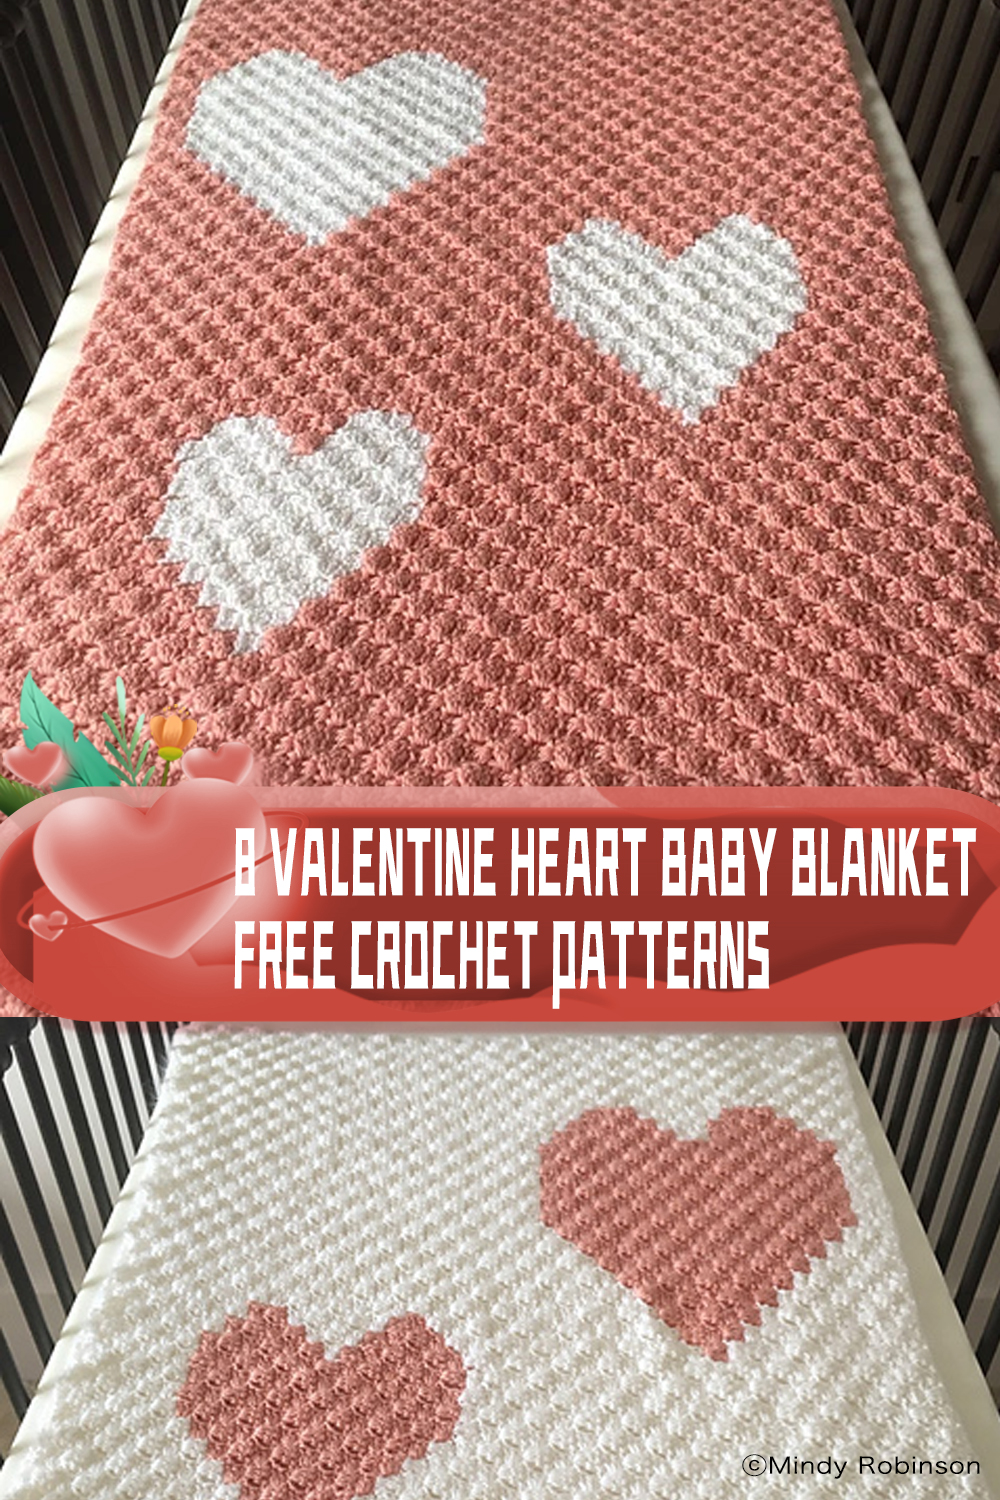 8 Valentine Heart Baby Blanket Free Crochet Patterns